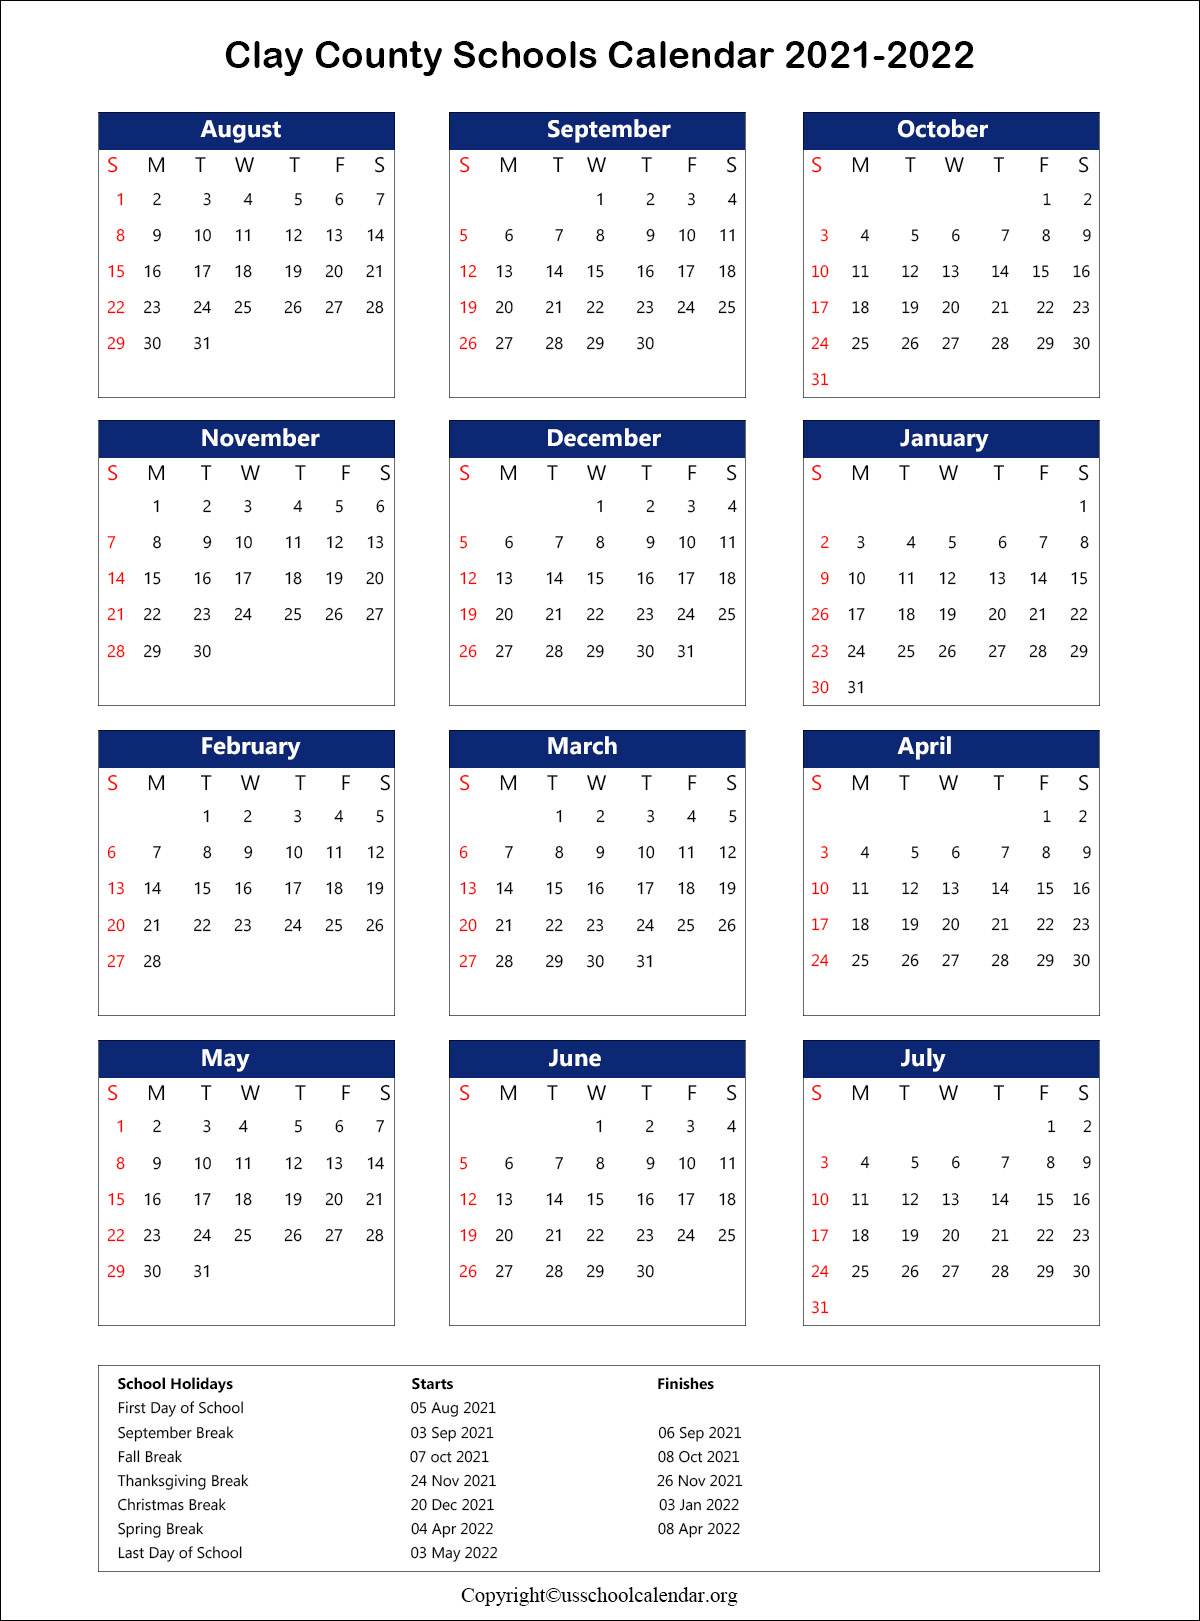 Clay County School Calendar with Holidays 2021 2022